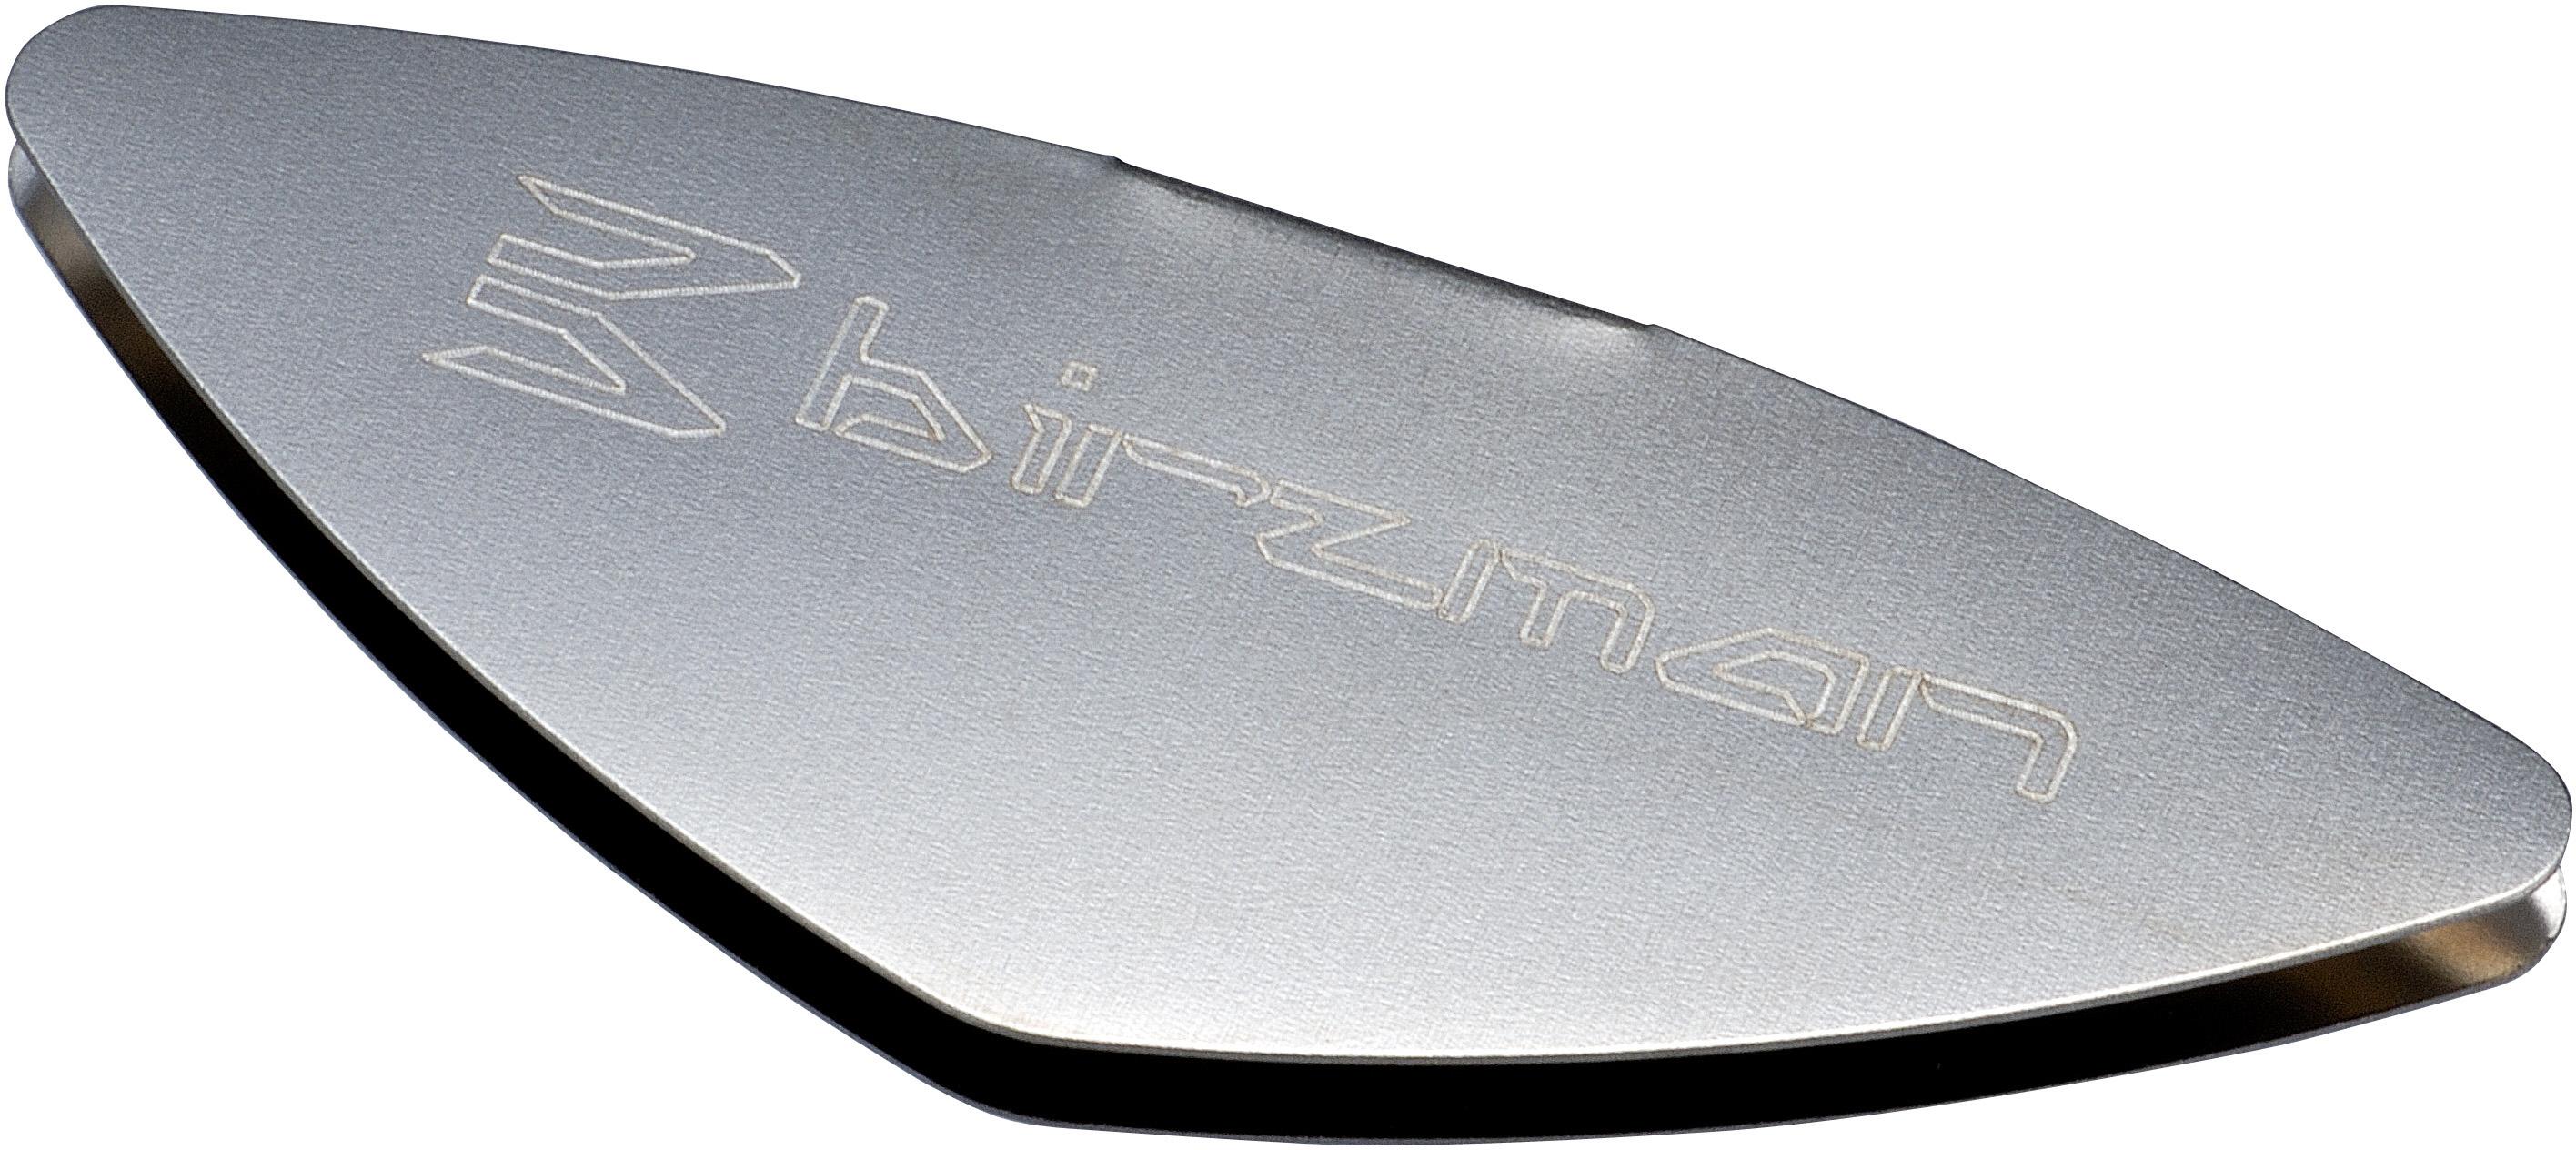 Birzman Clam Disc Brake Calliper Indicator Tool  Silver